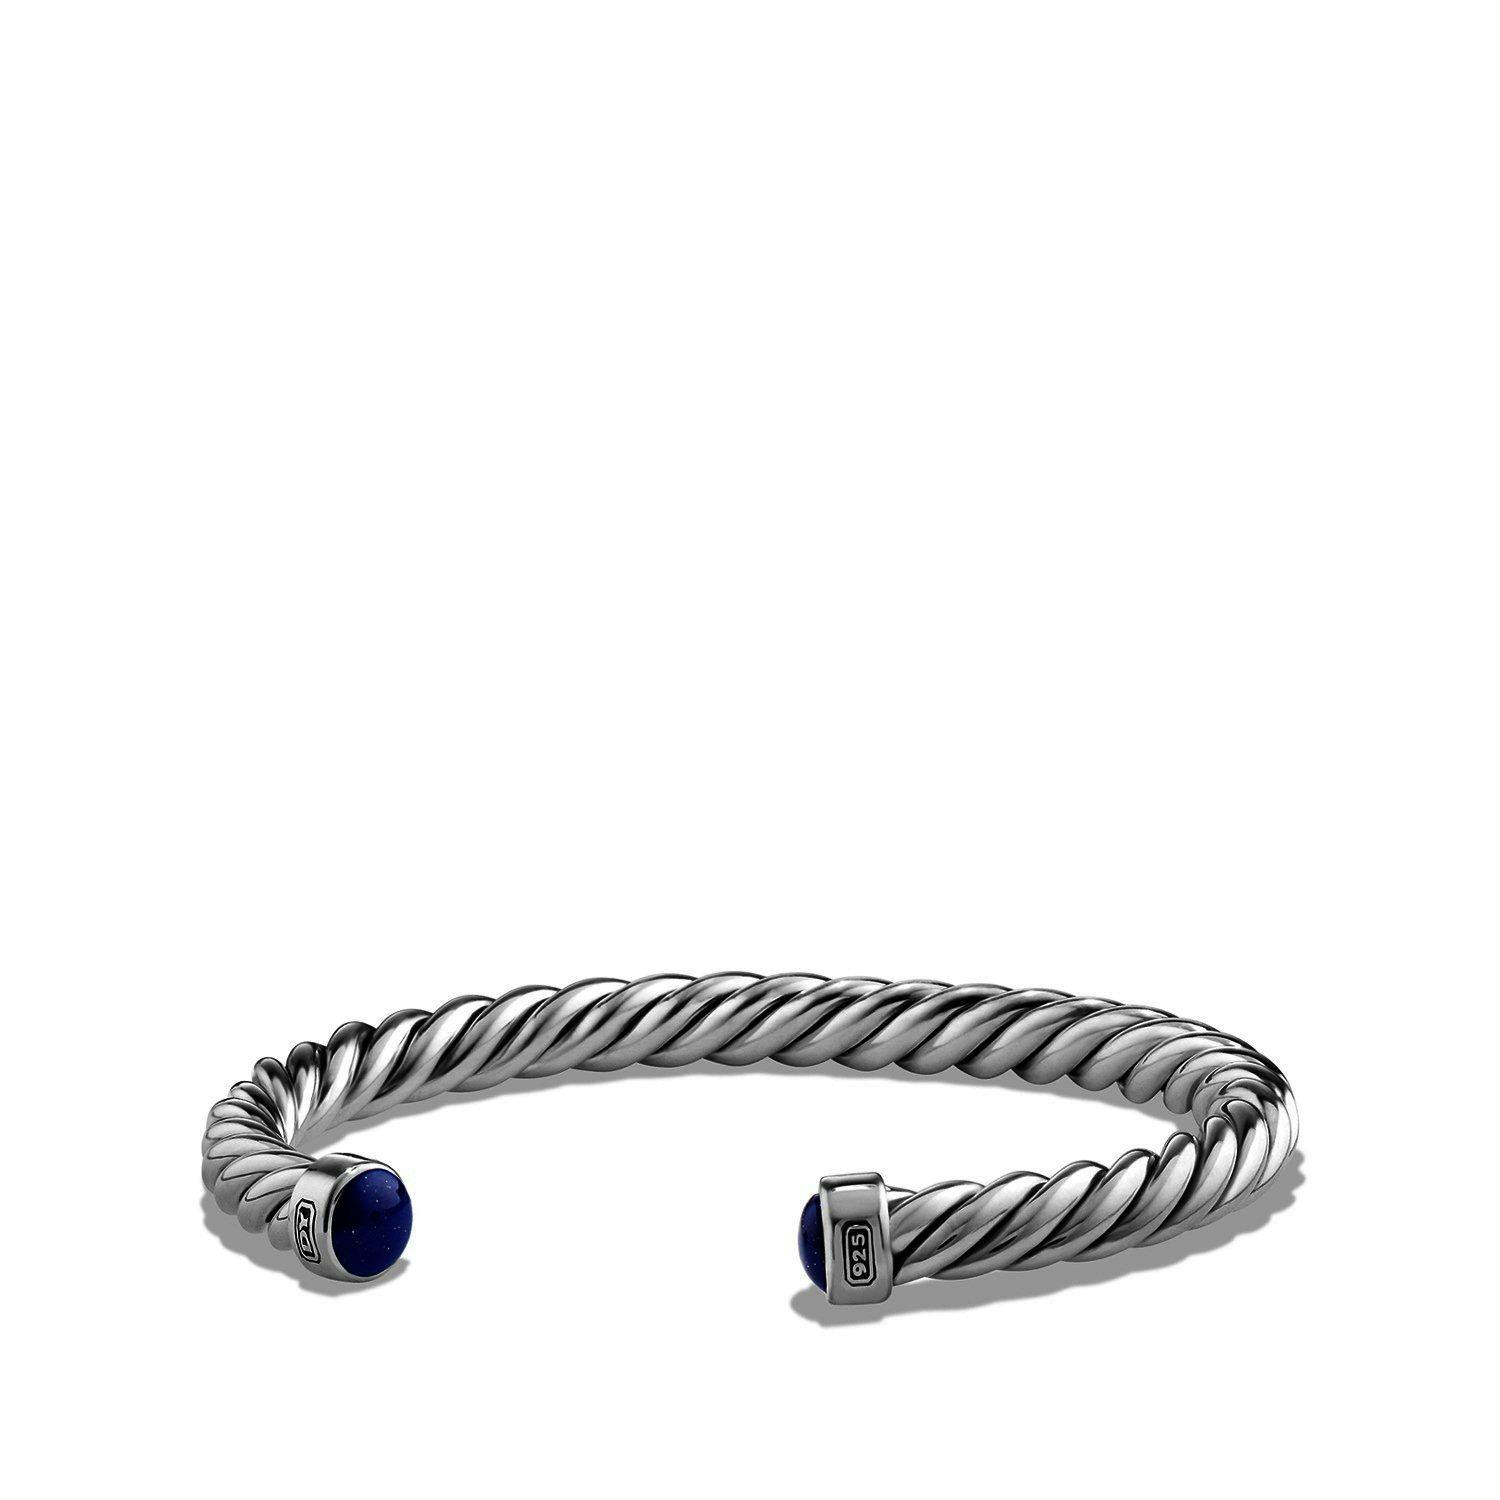 David Yurman Men's Cable Cuff Bracelet with Lapis